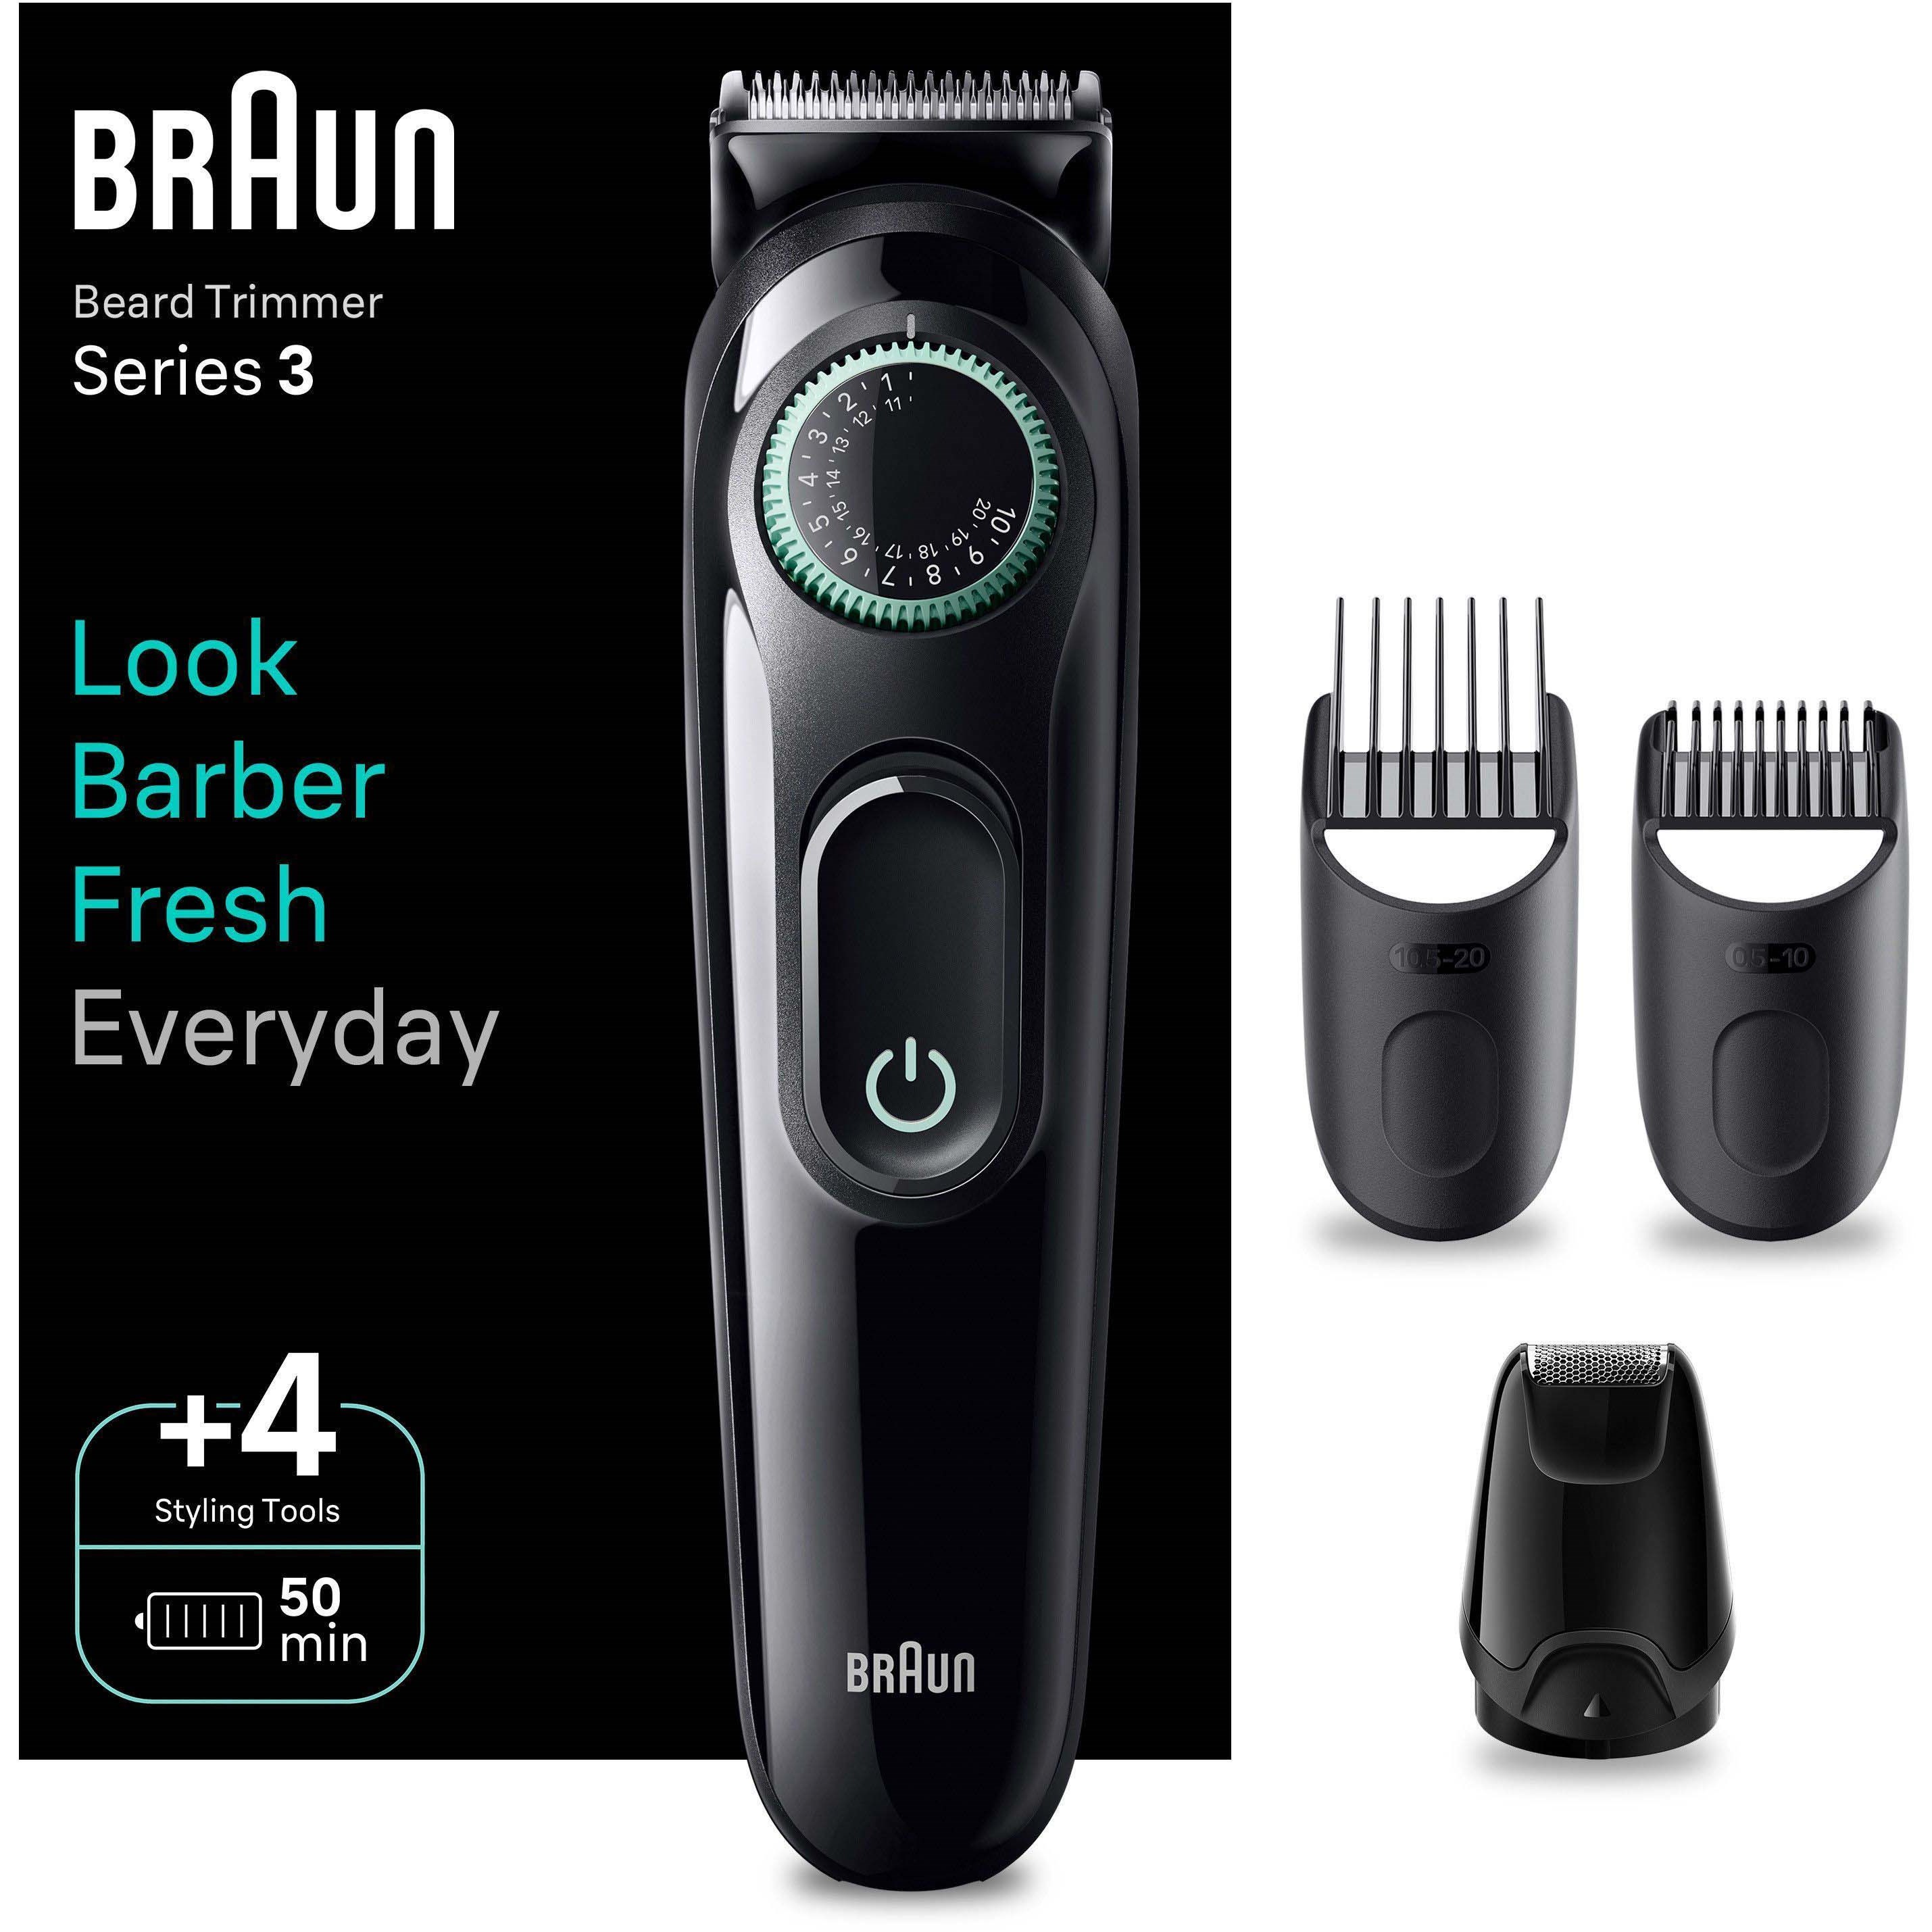 Braun Beard Trimmer Series 3 BT3421 Trimmer For Men With 58